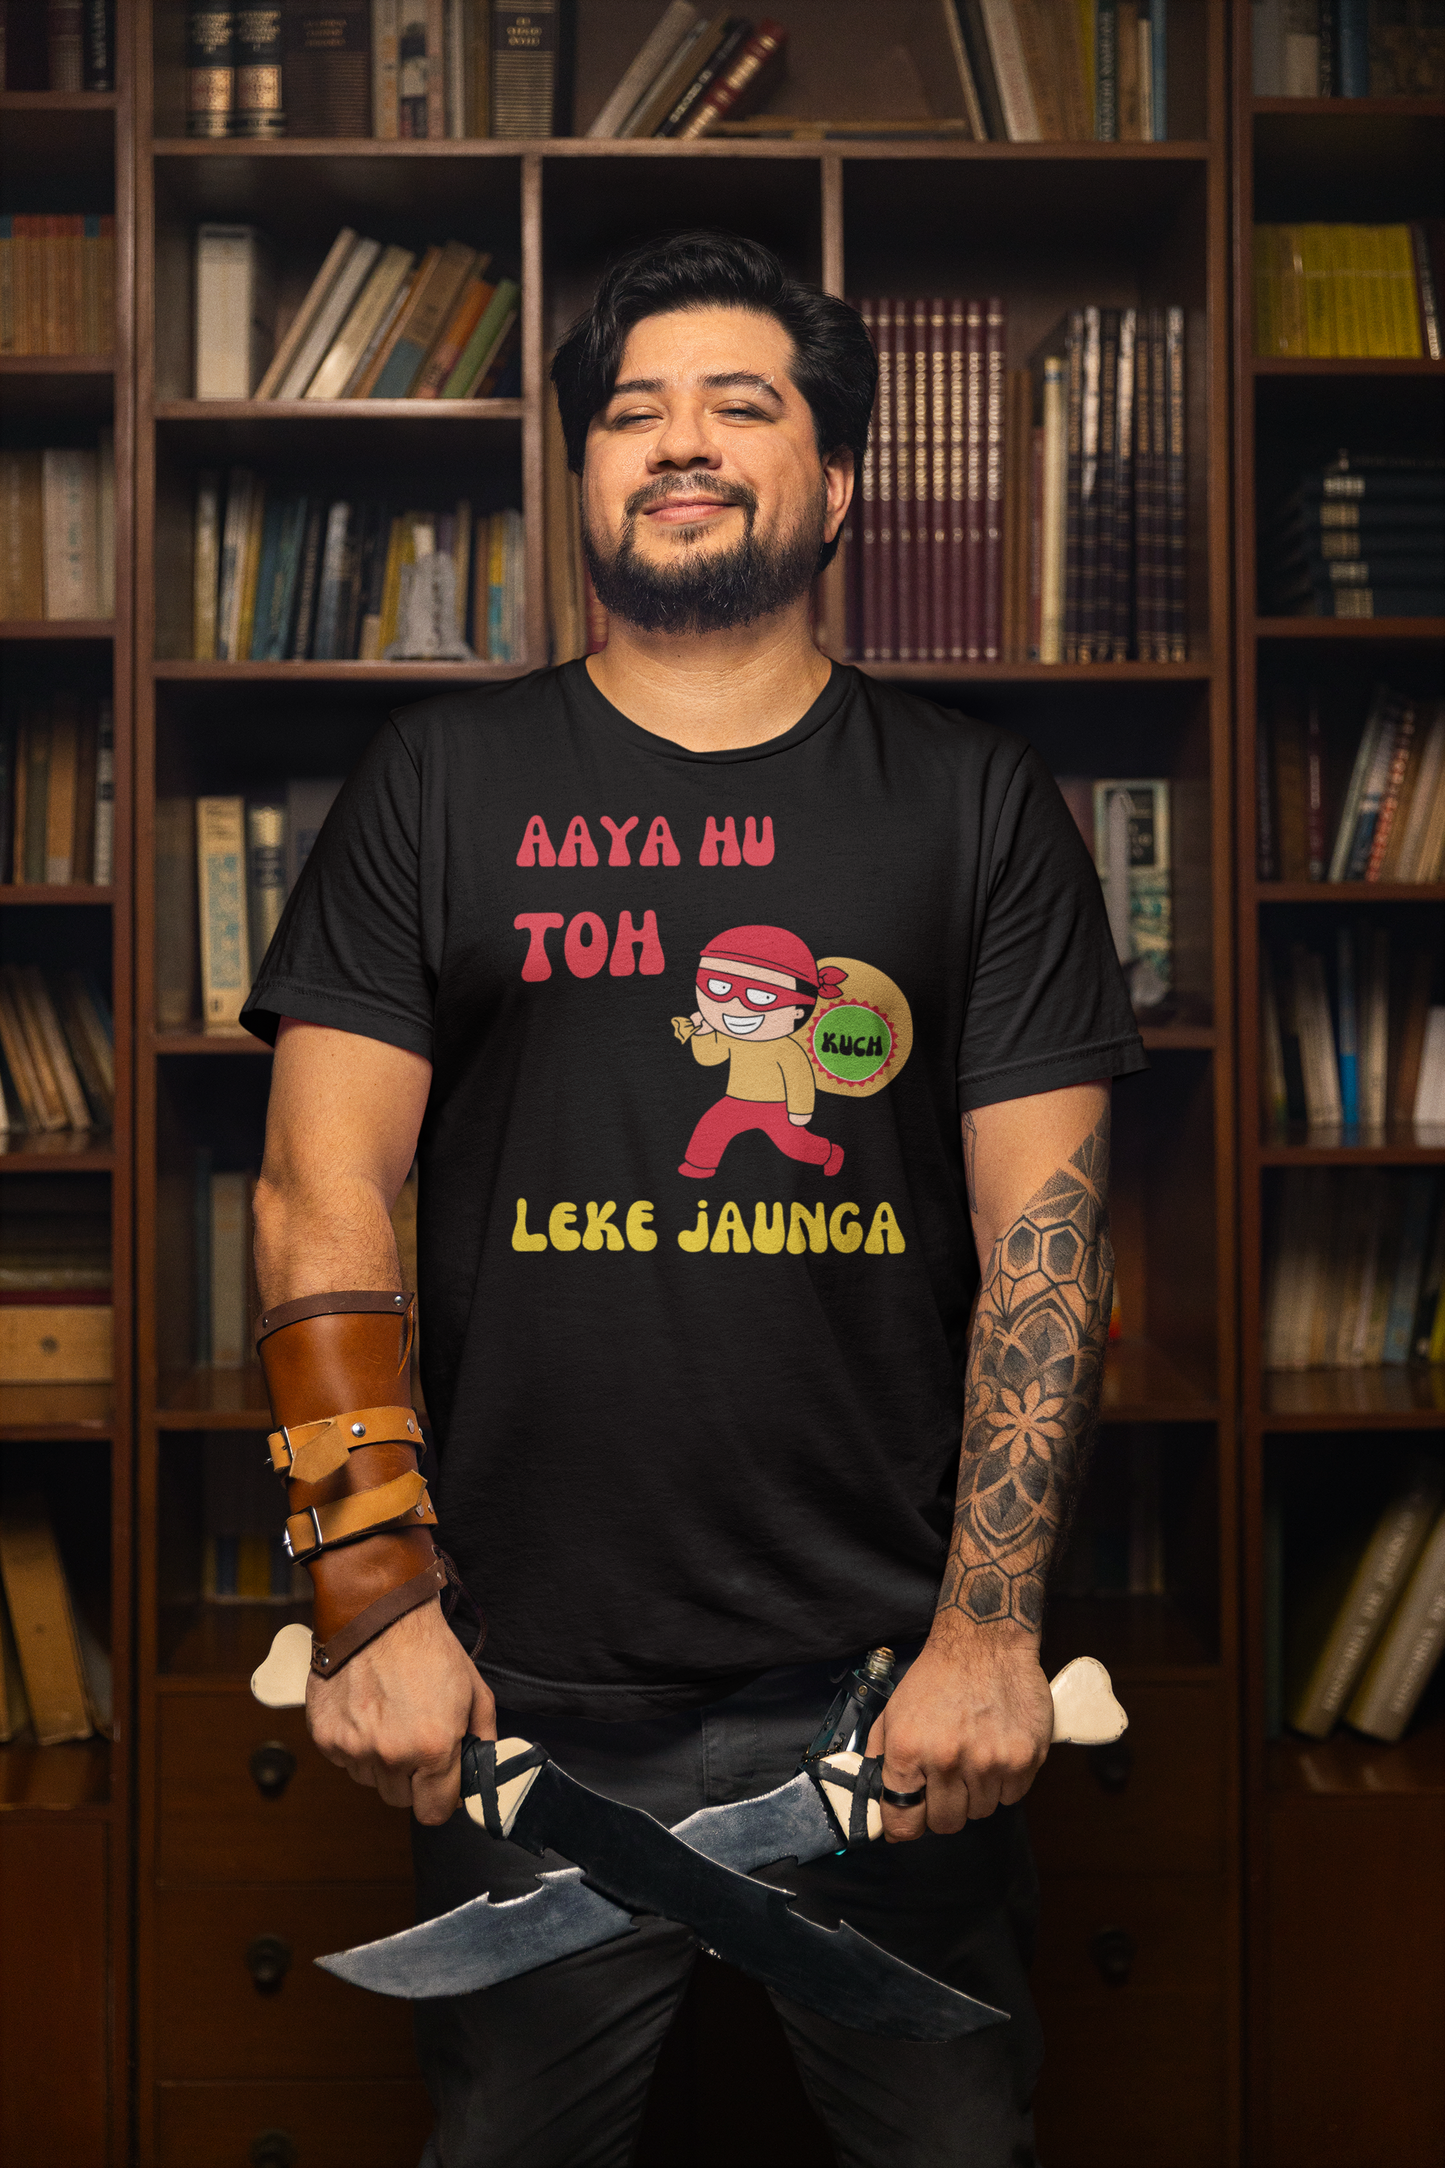 Bilkool Kuch Leke Jaunga Cotton Half Sleeve T-Shirt